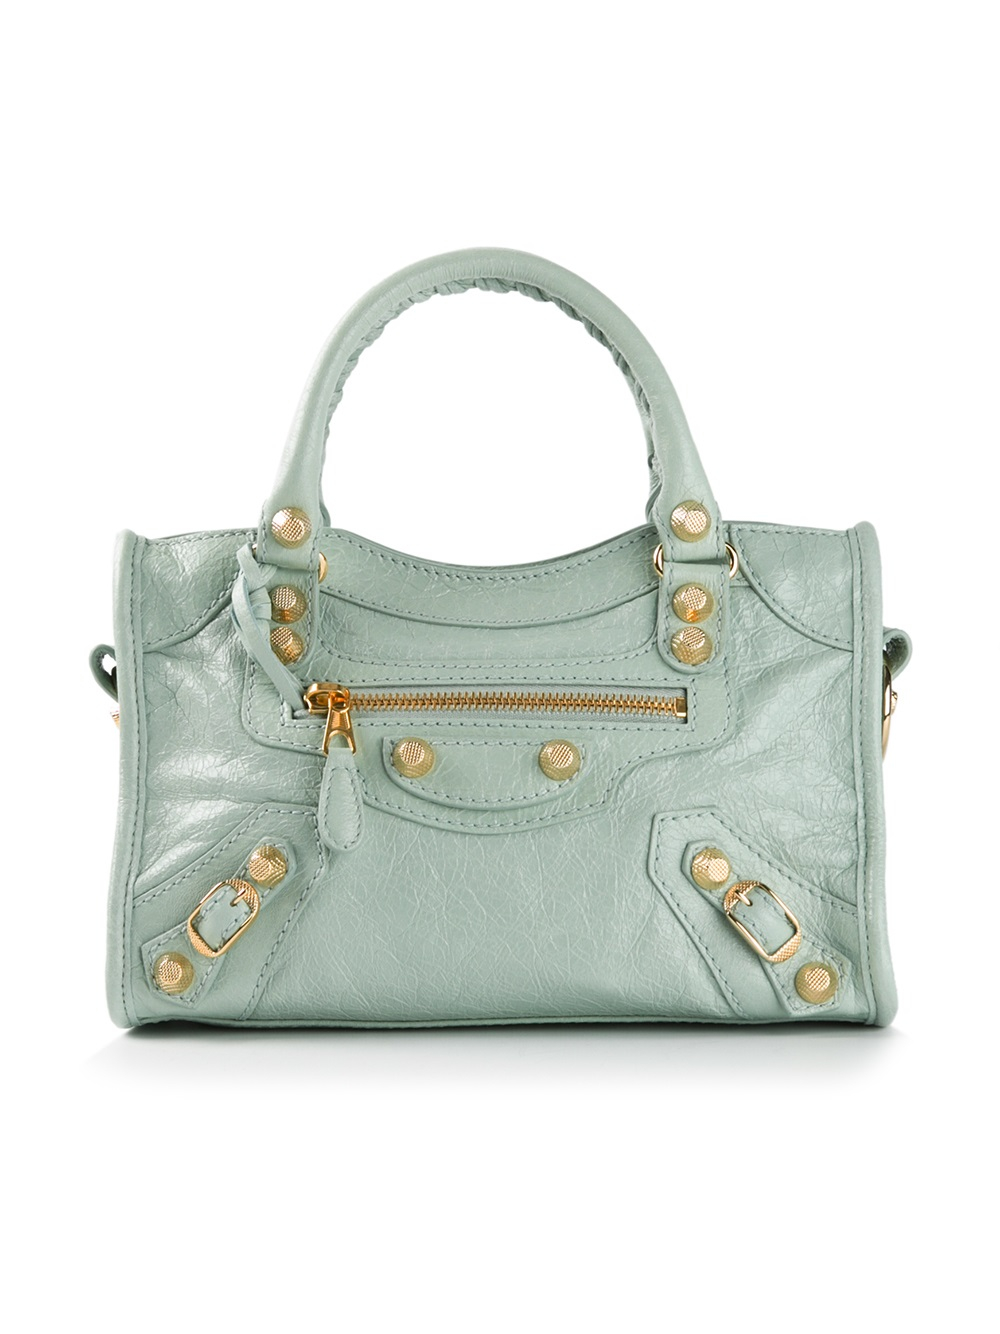 Lyst - Balenciaga Mini City Shoulder Bag in Green